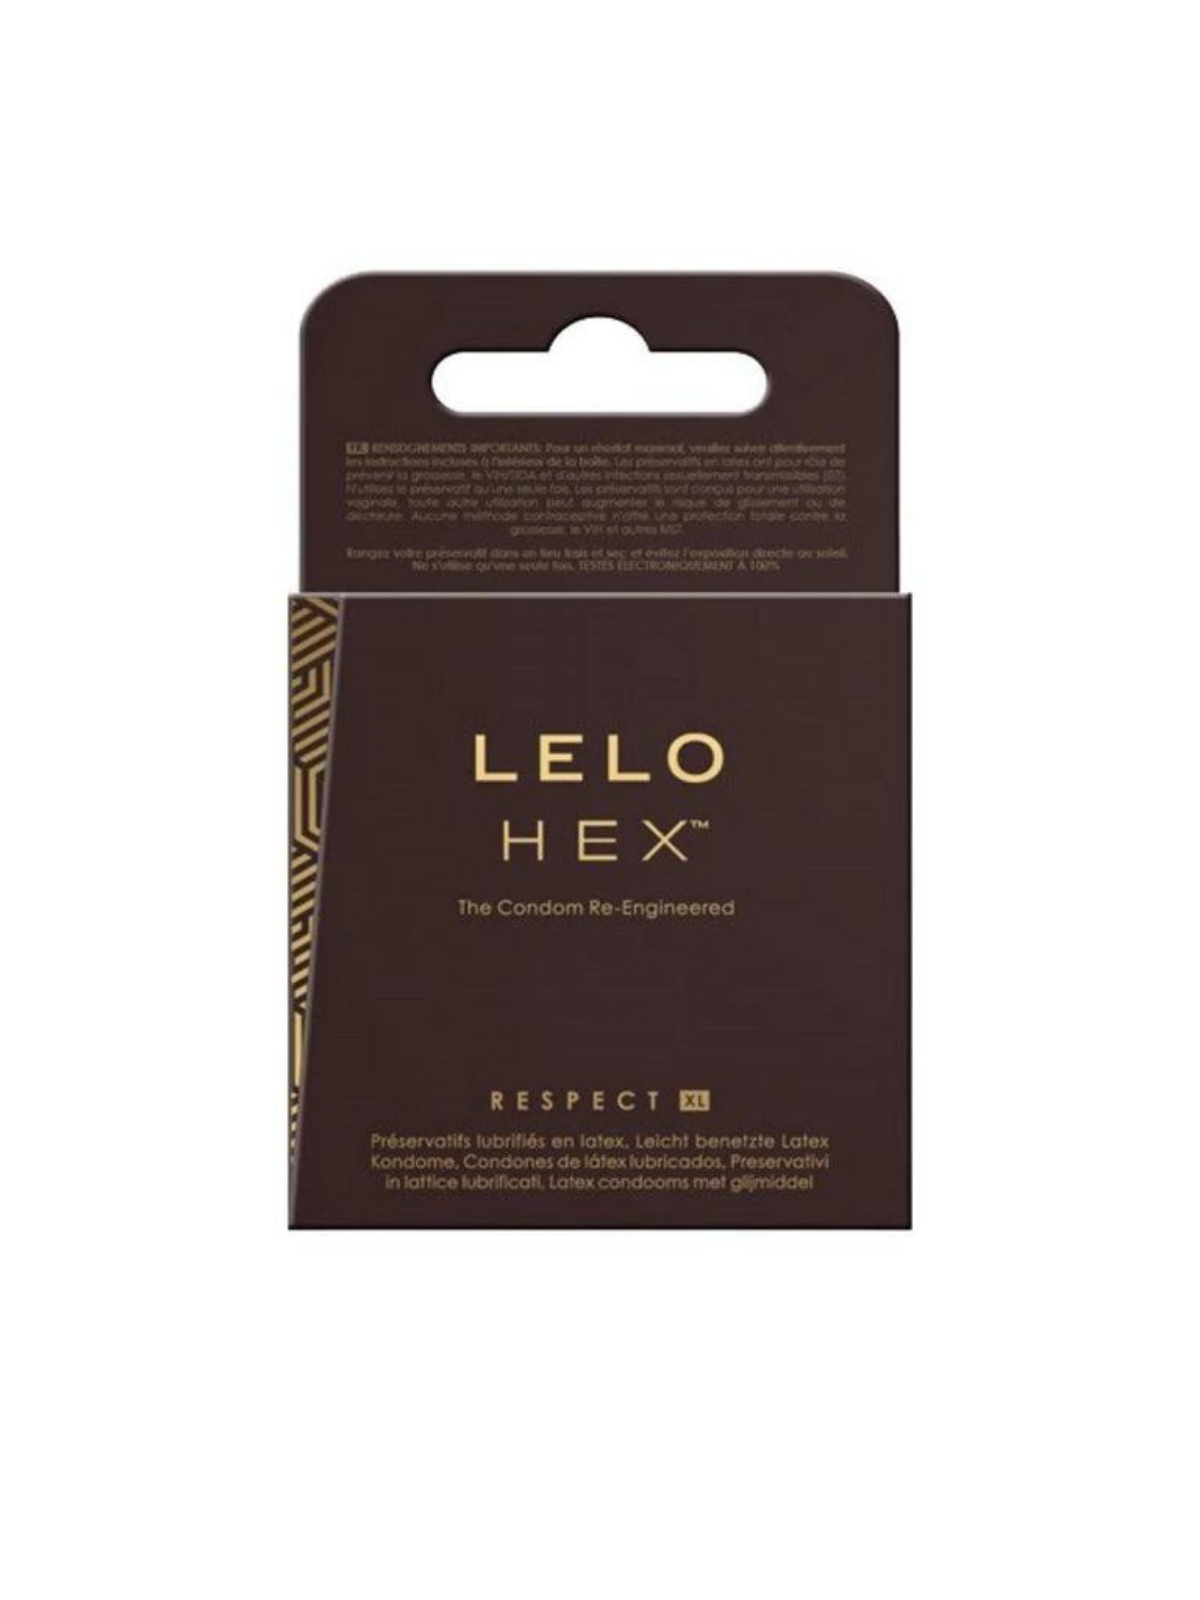 HEX™ Respect XL Condoms by Lelo